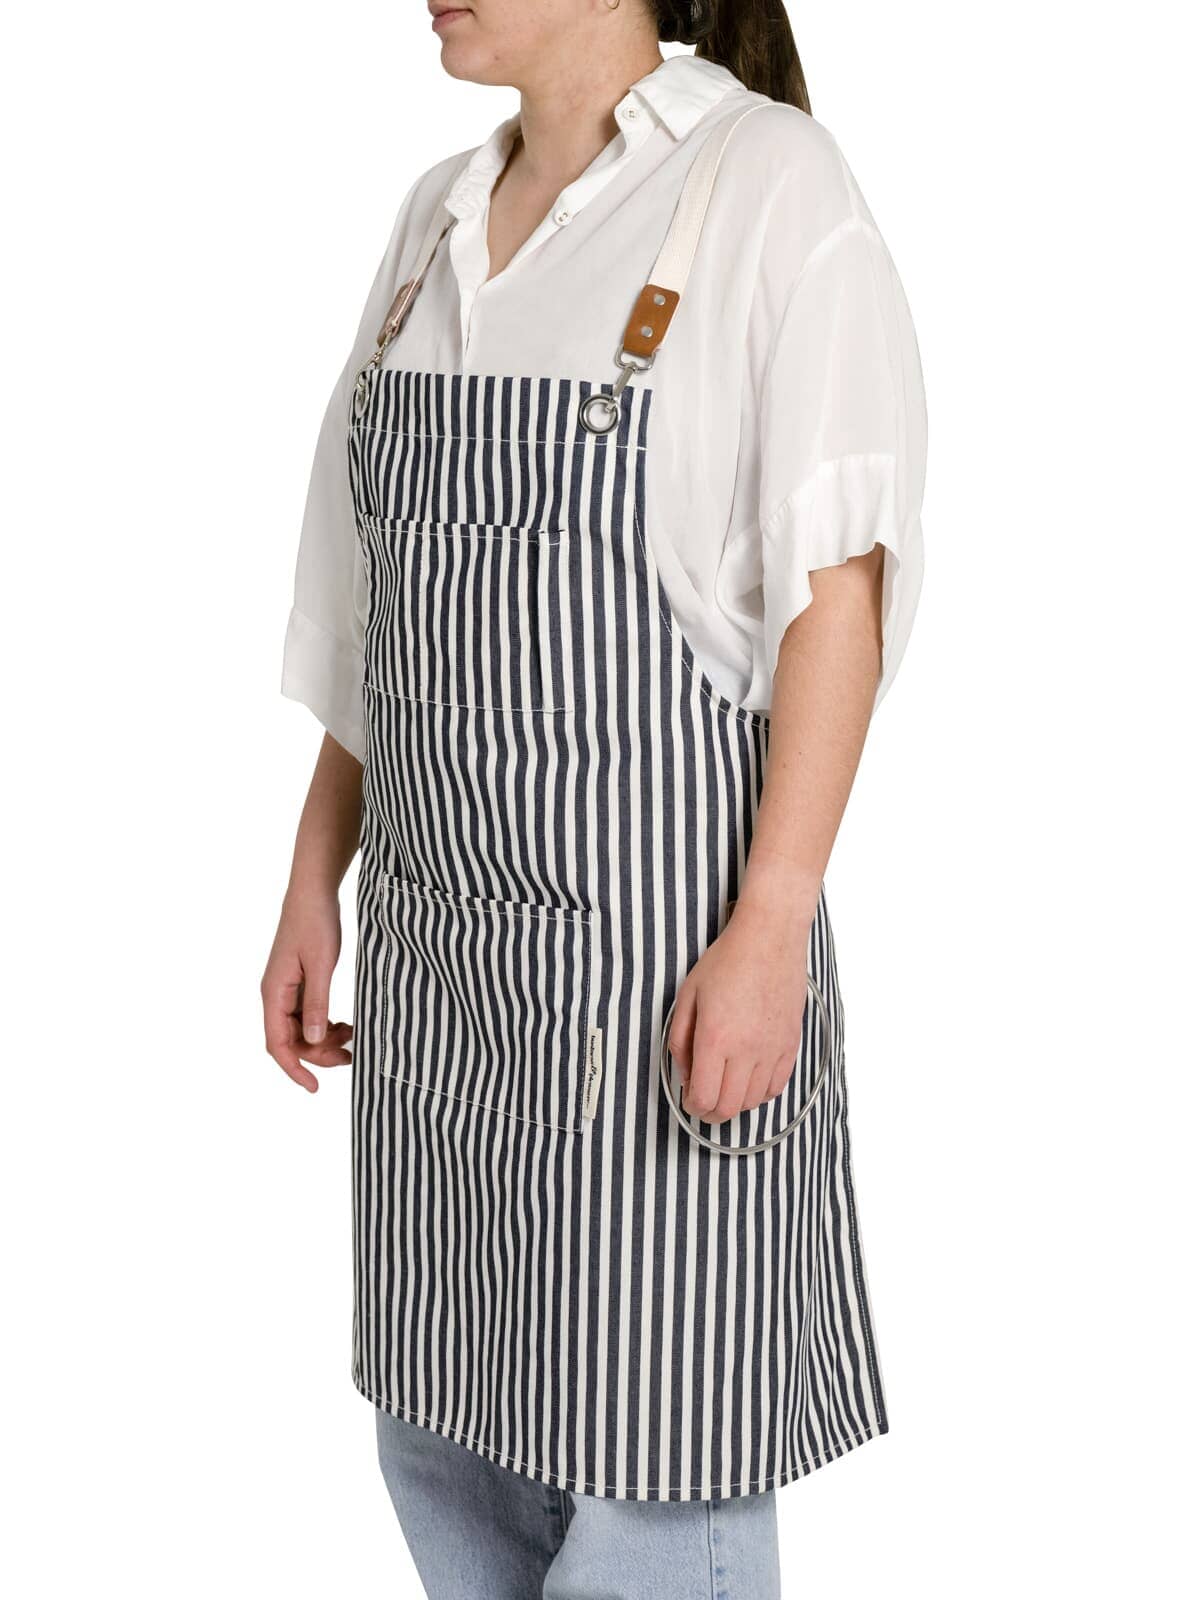 Studio image of navy apron on model